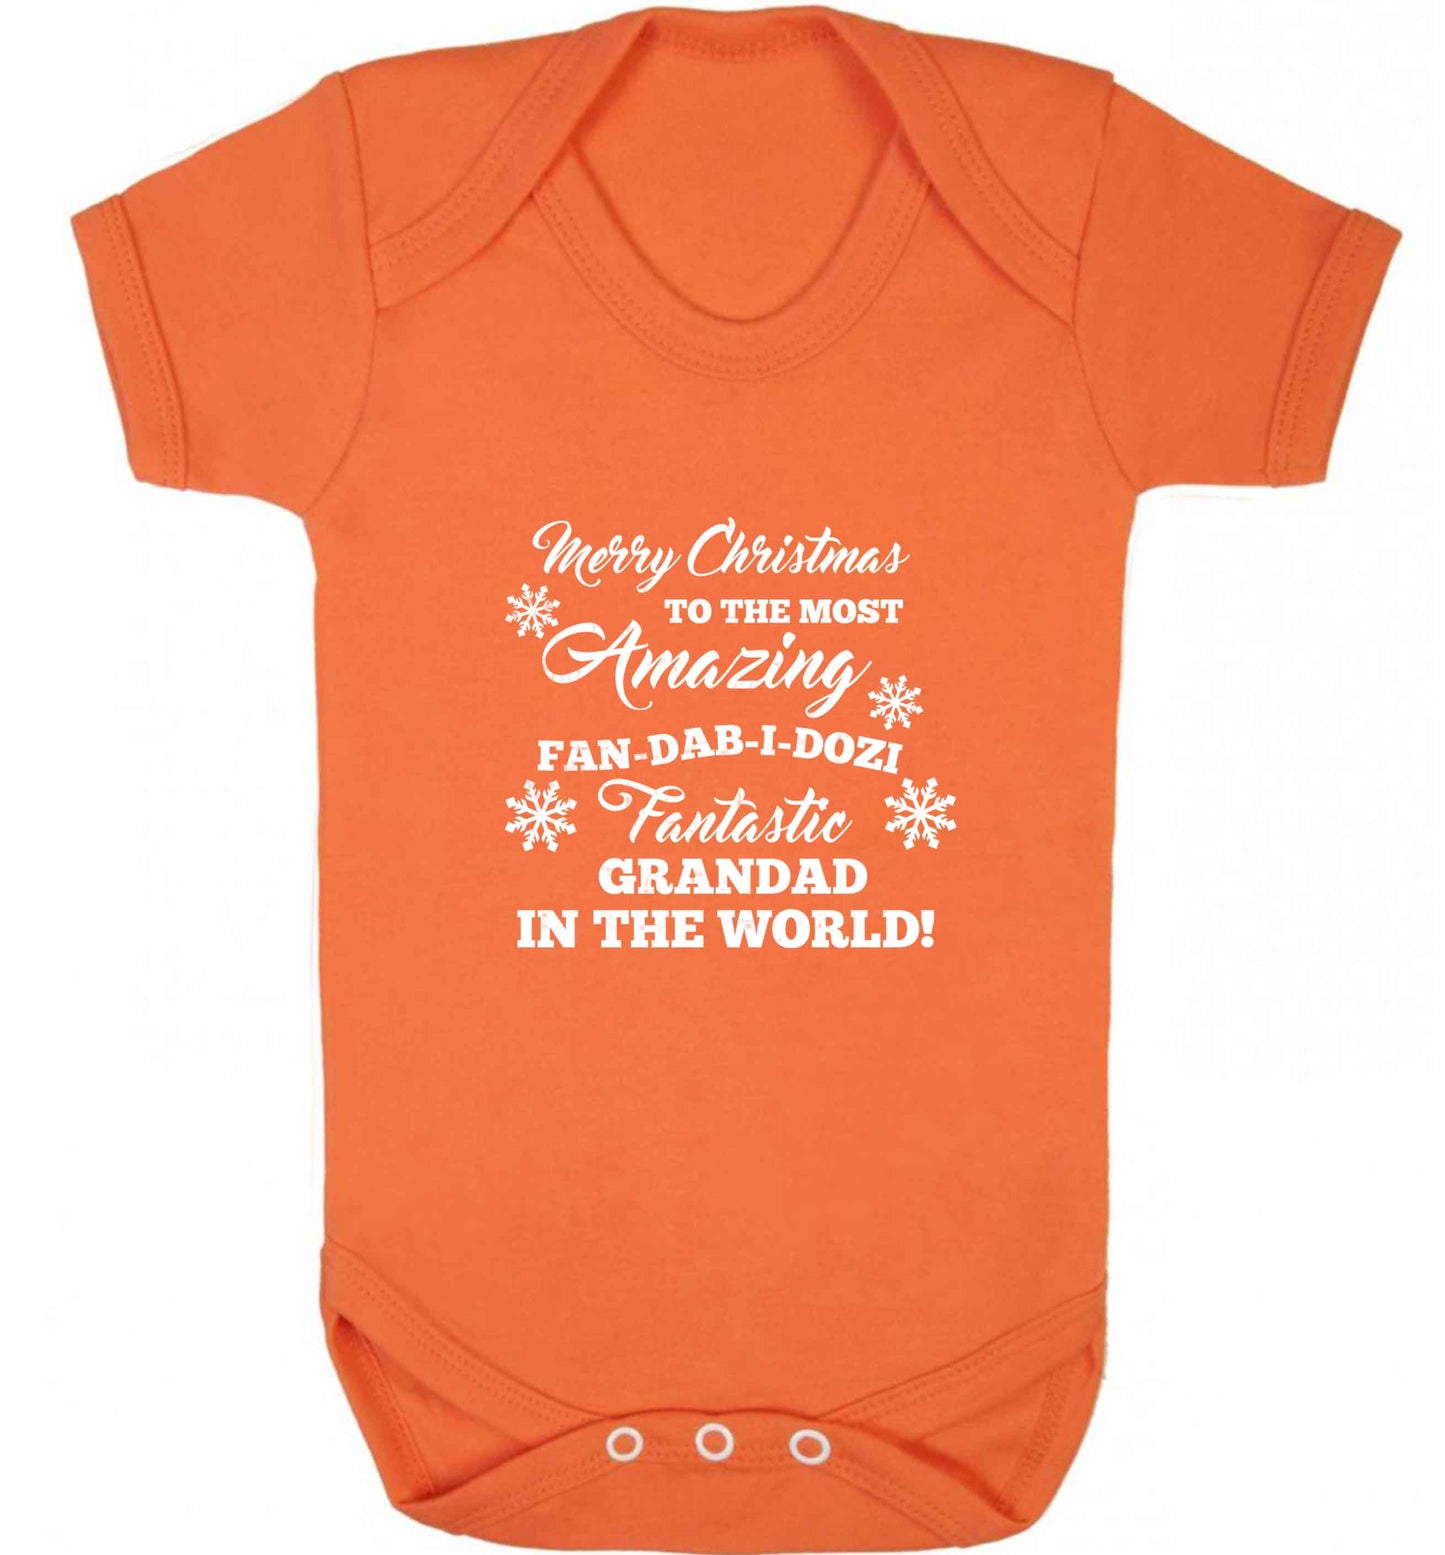 Merry Christmas to the most amazing fan-dab-i-dozi fantasic Grandad in the world baby vest orange 18-24 months